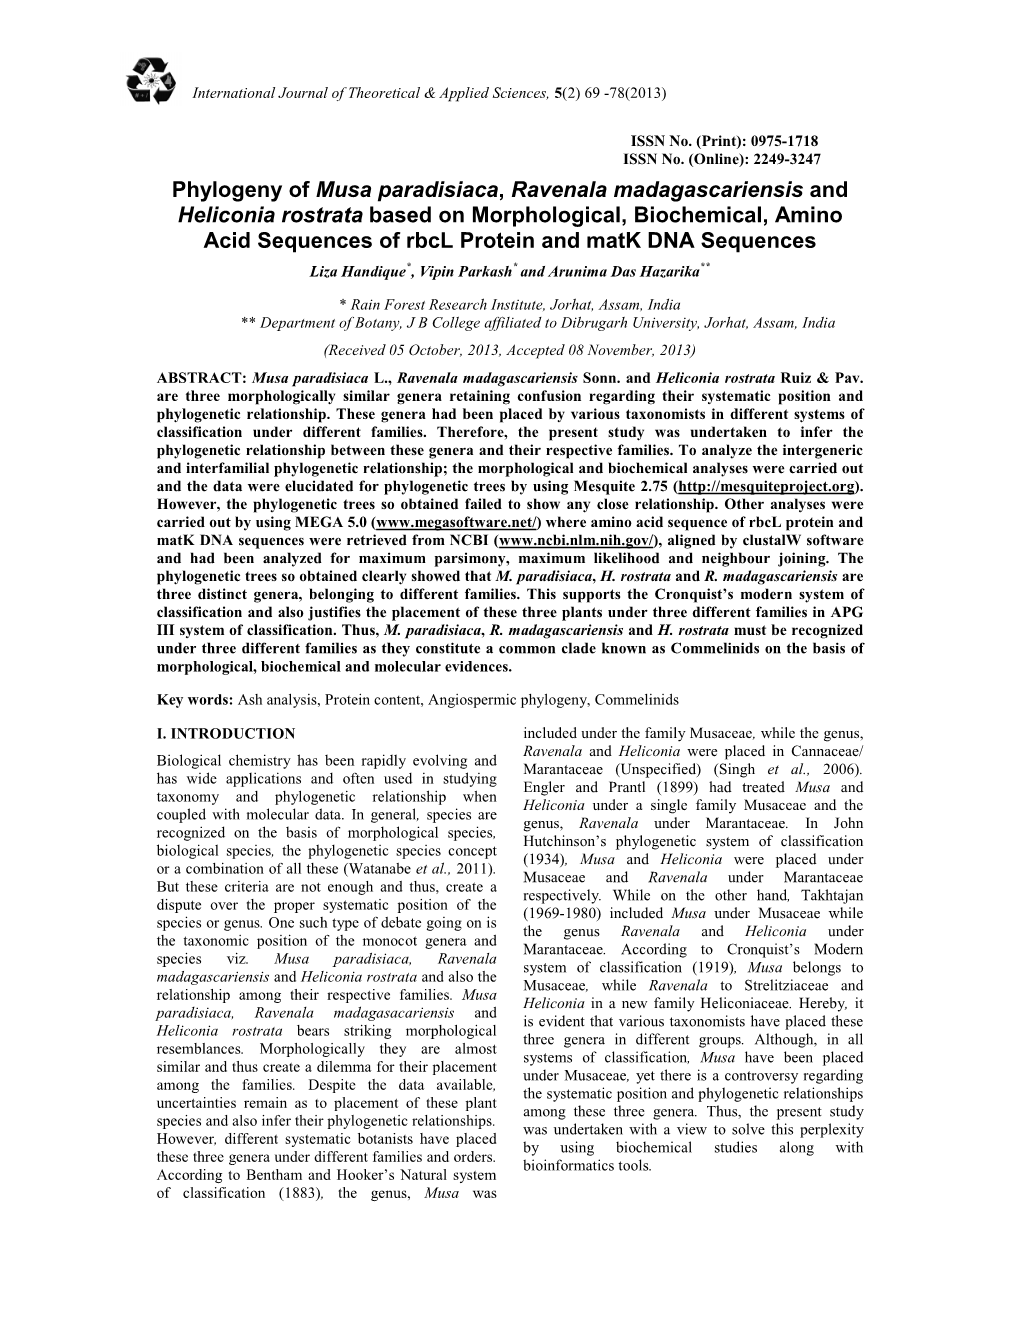 Phylogeny of Musa Paradisiaca, Ravenala Madagascariensis And